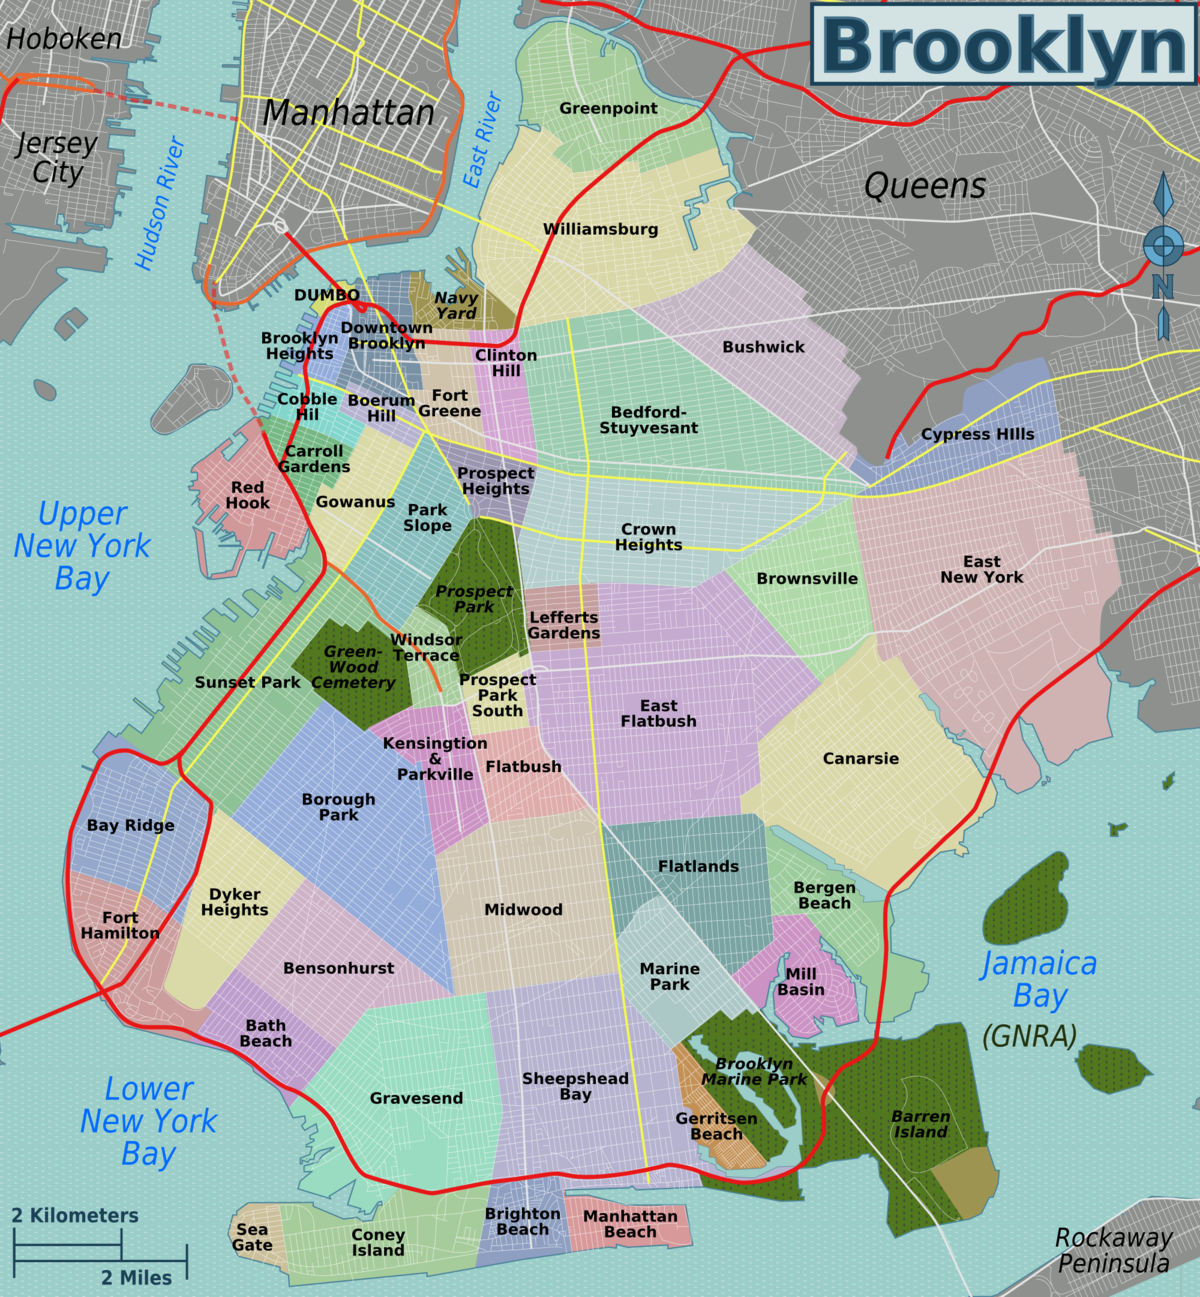 Brooklyn Heights - Google My Maps